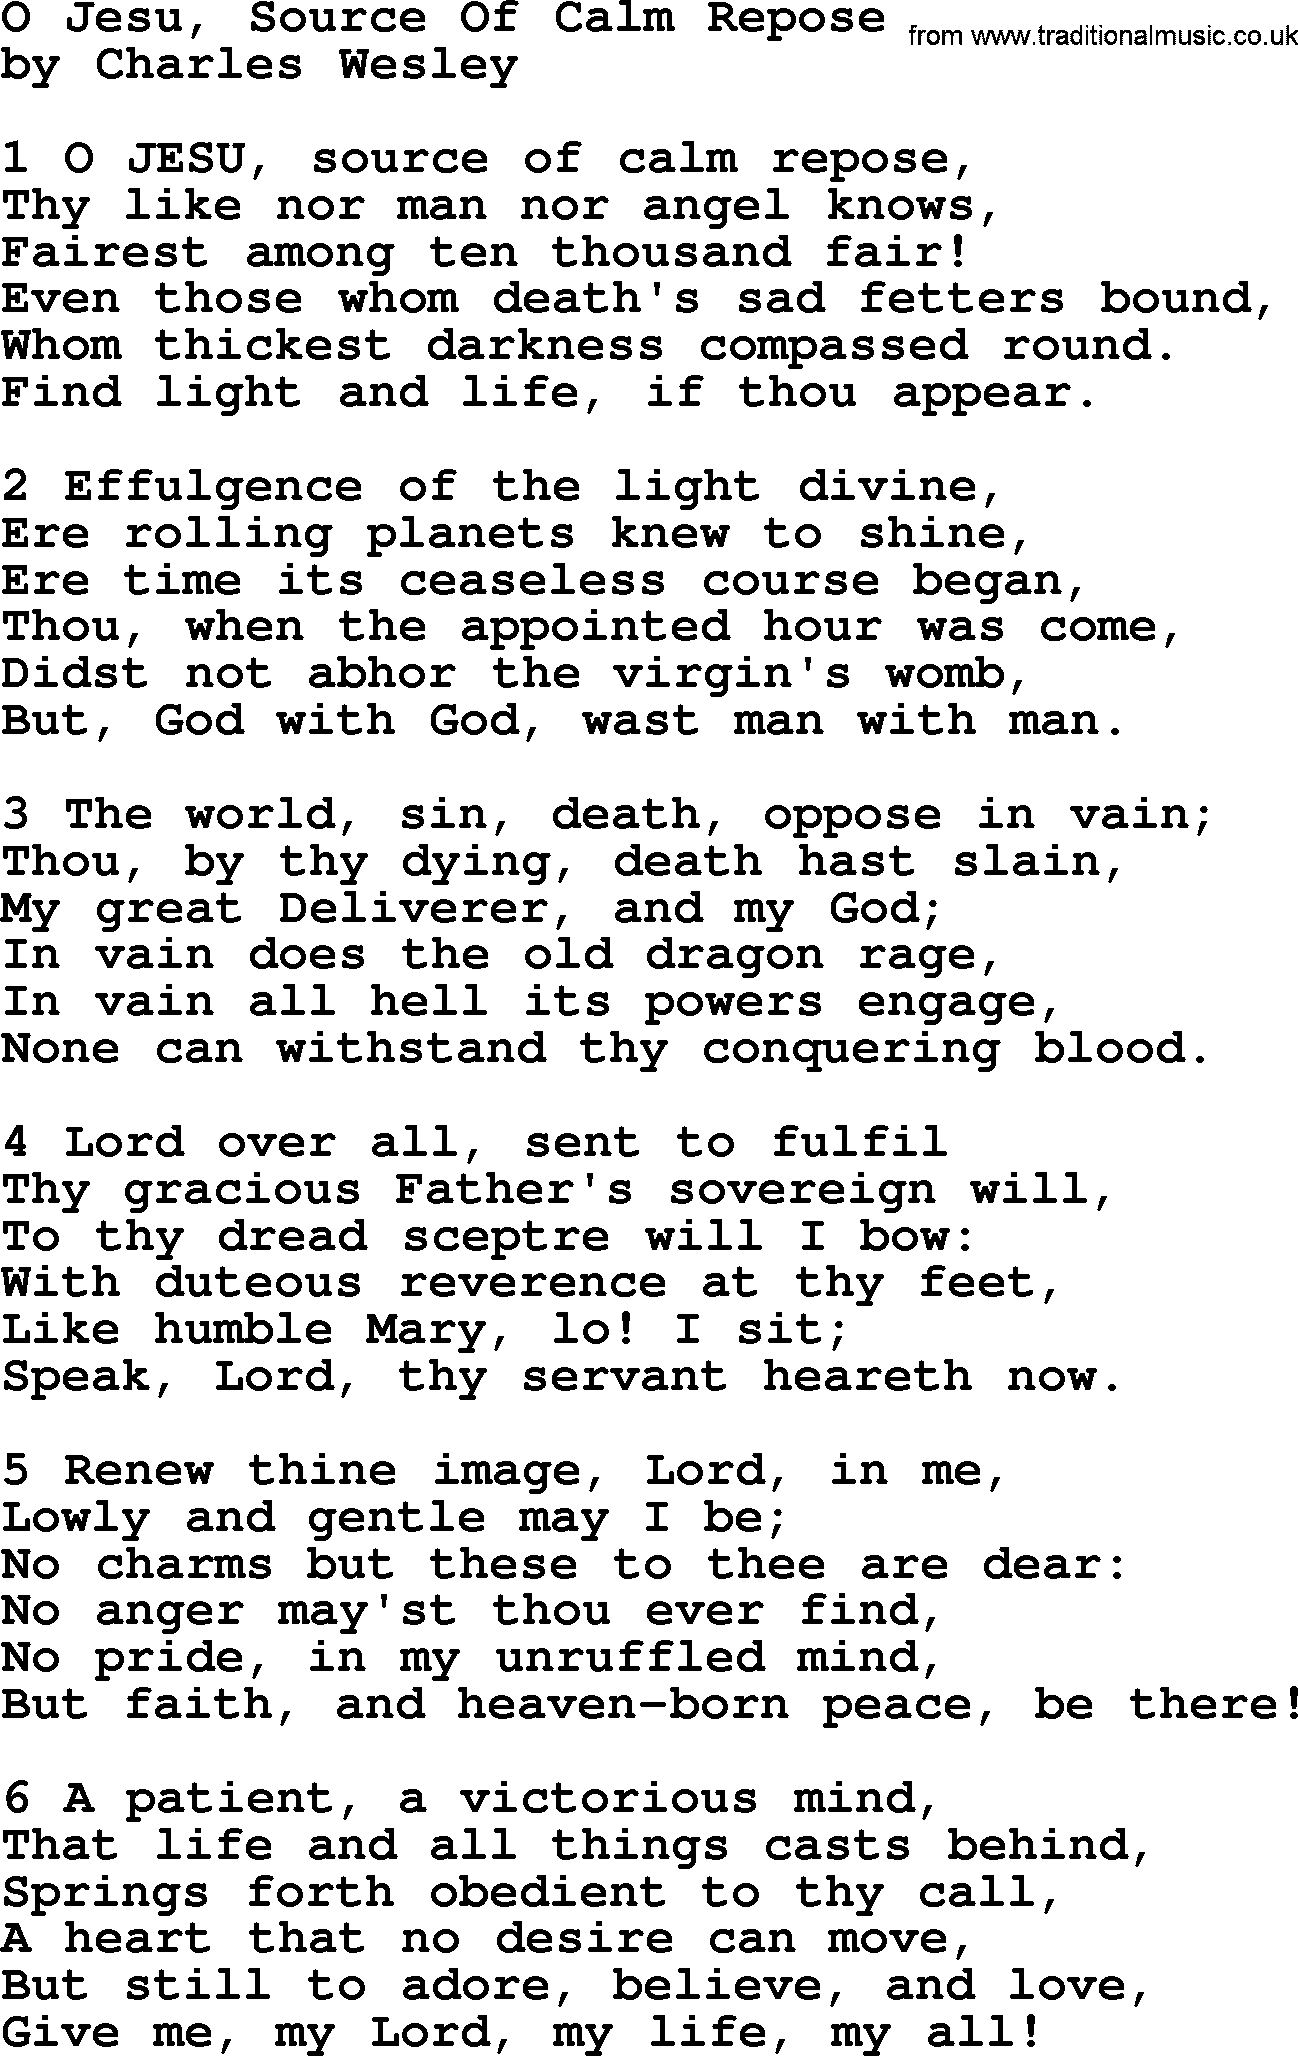 Charles Wesley hymn: O Jesu, Source Of Calm Repose, lyrics